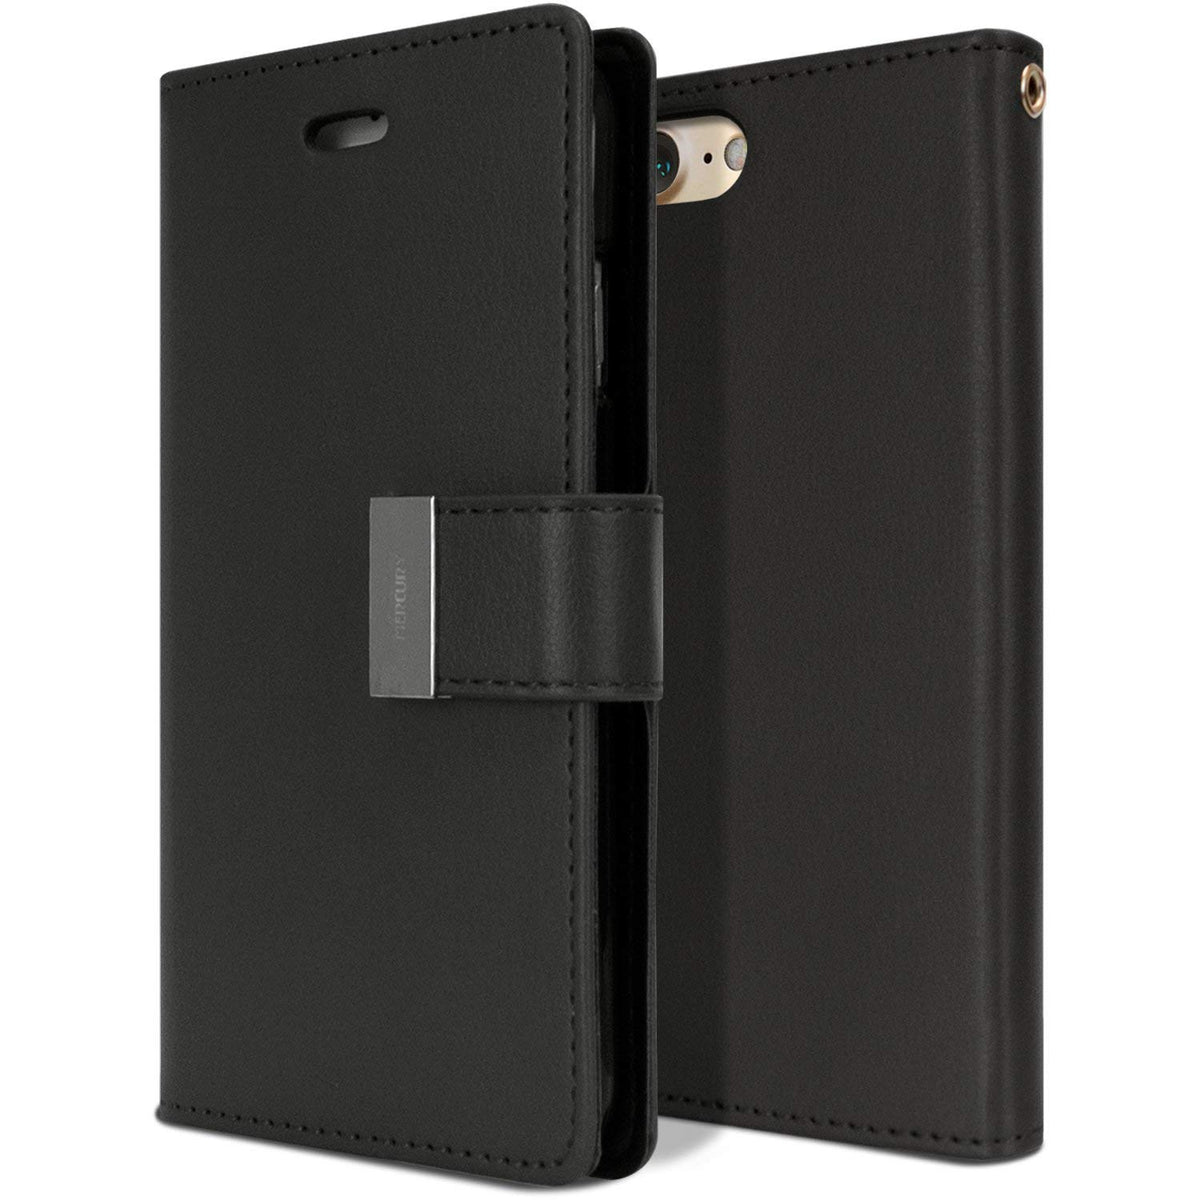 Iphone 7Plus / 8Plus Wallet Flip Case with Card Slots Black